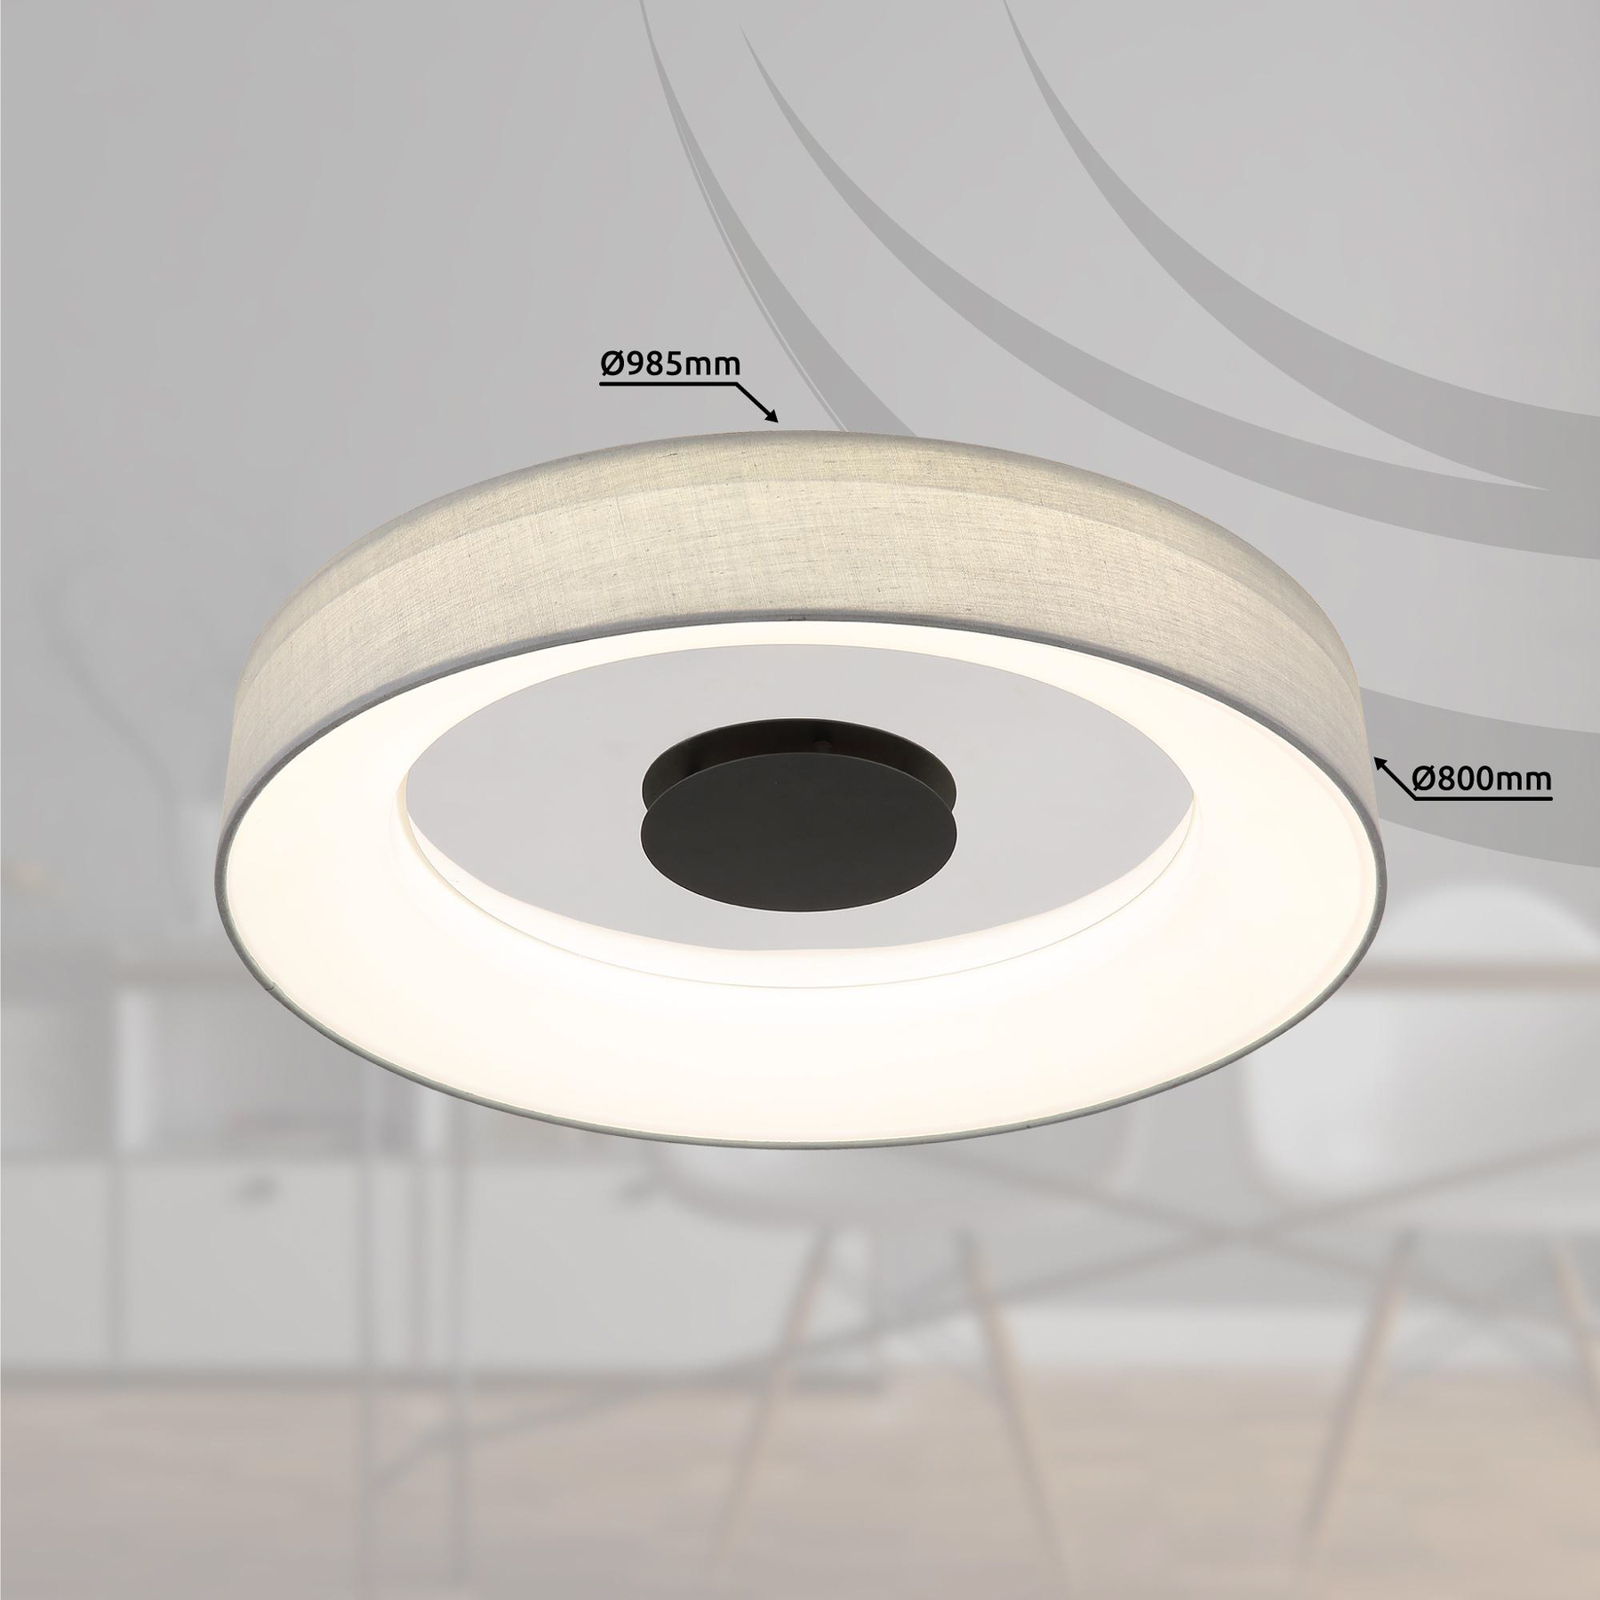 SMART+ plafondlamp Terpsa, wit/grijs, Ø 46,8 cm, stof